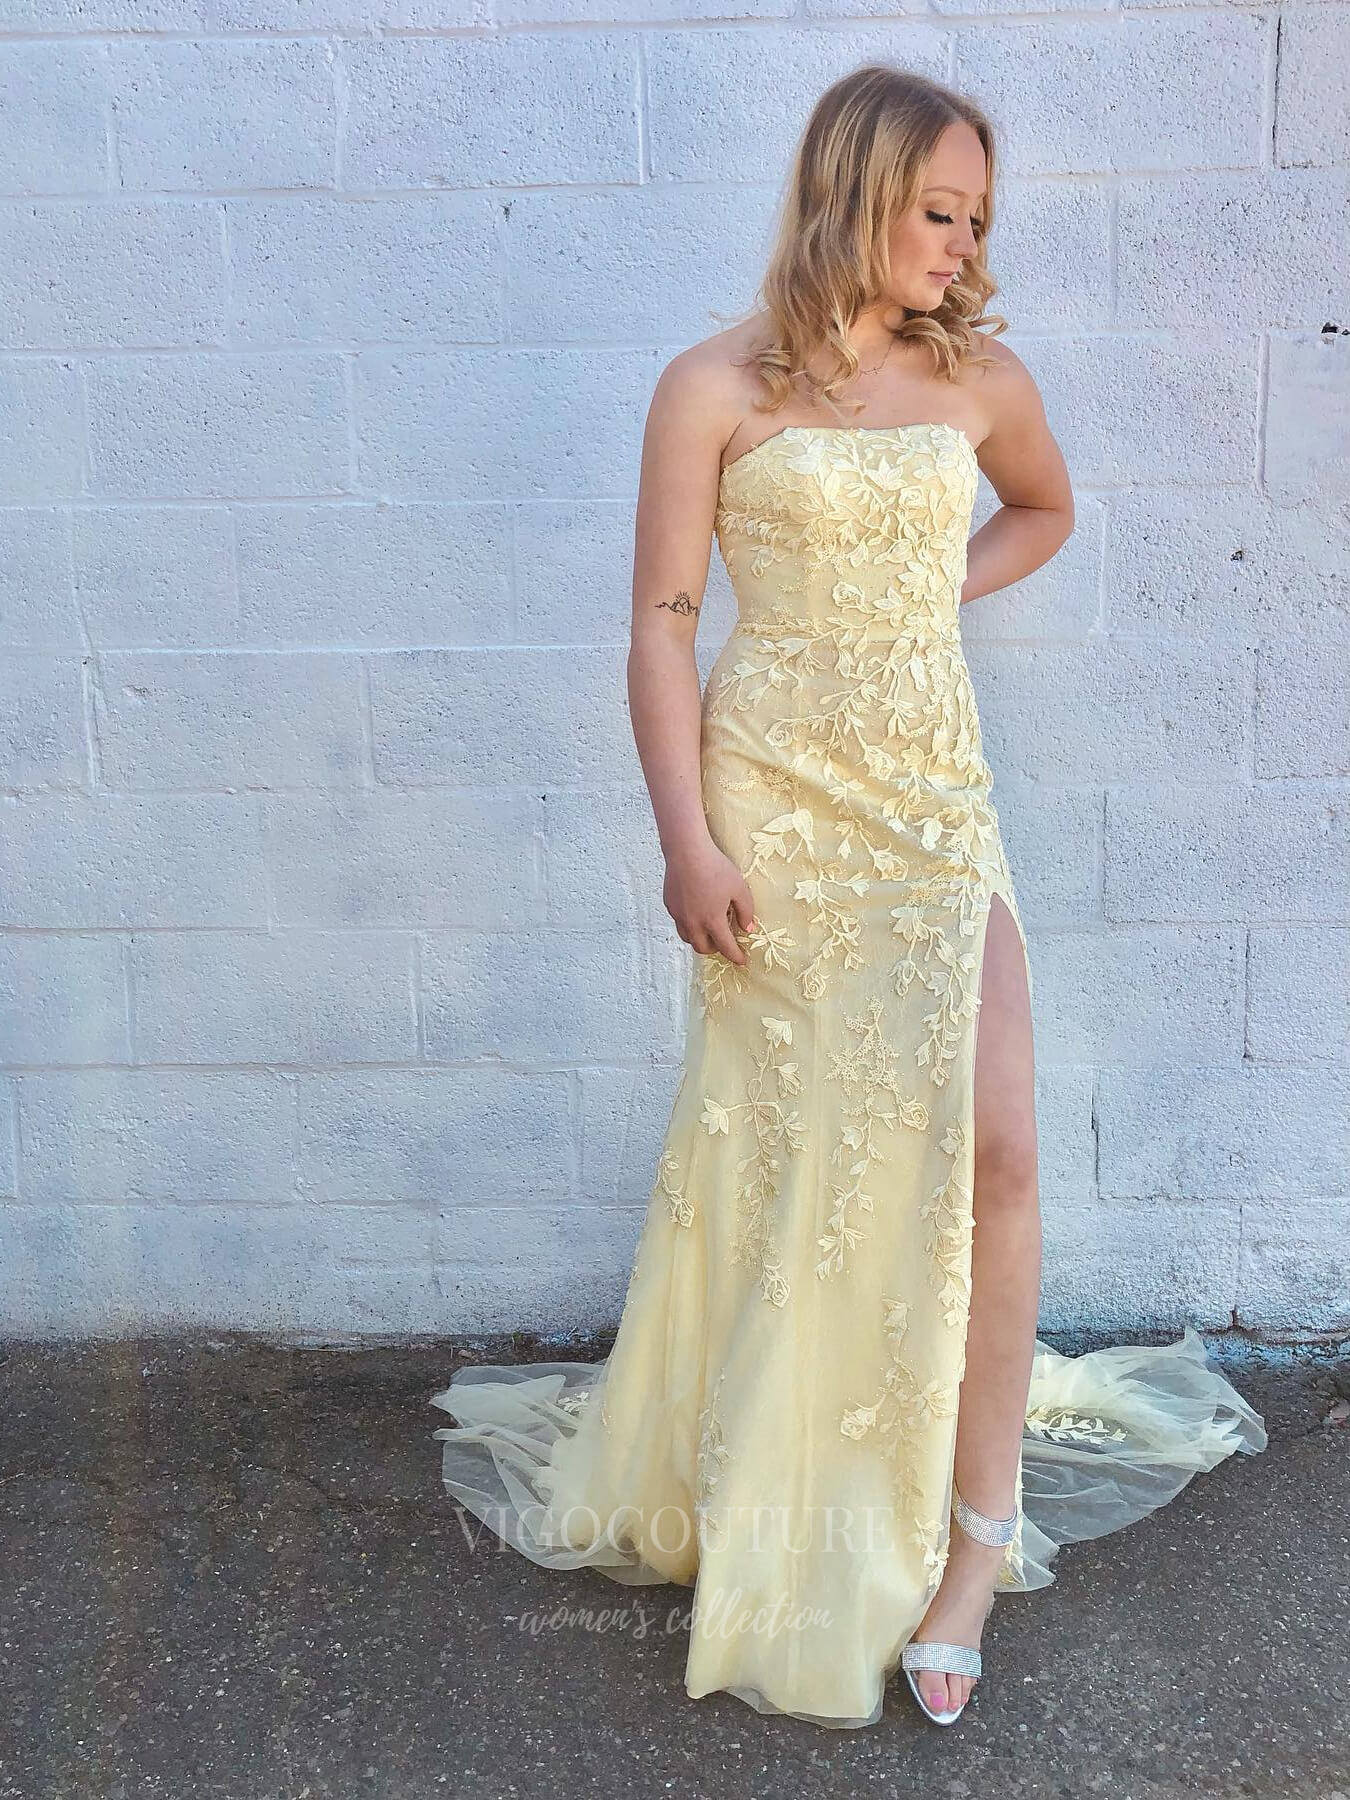 vigocouture-Strapless Lace Applique Mermaid Prom Dress 20927-Prom Dresses-vigocouture-Yellow-US2-